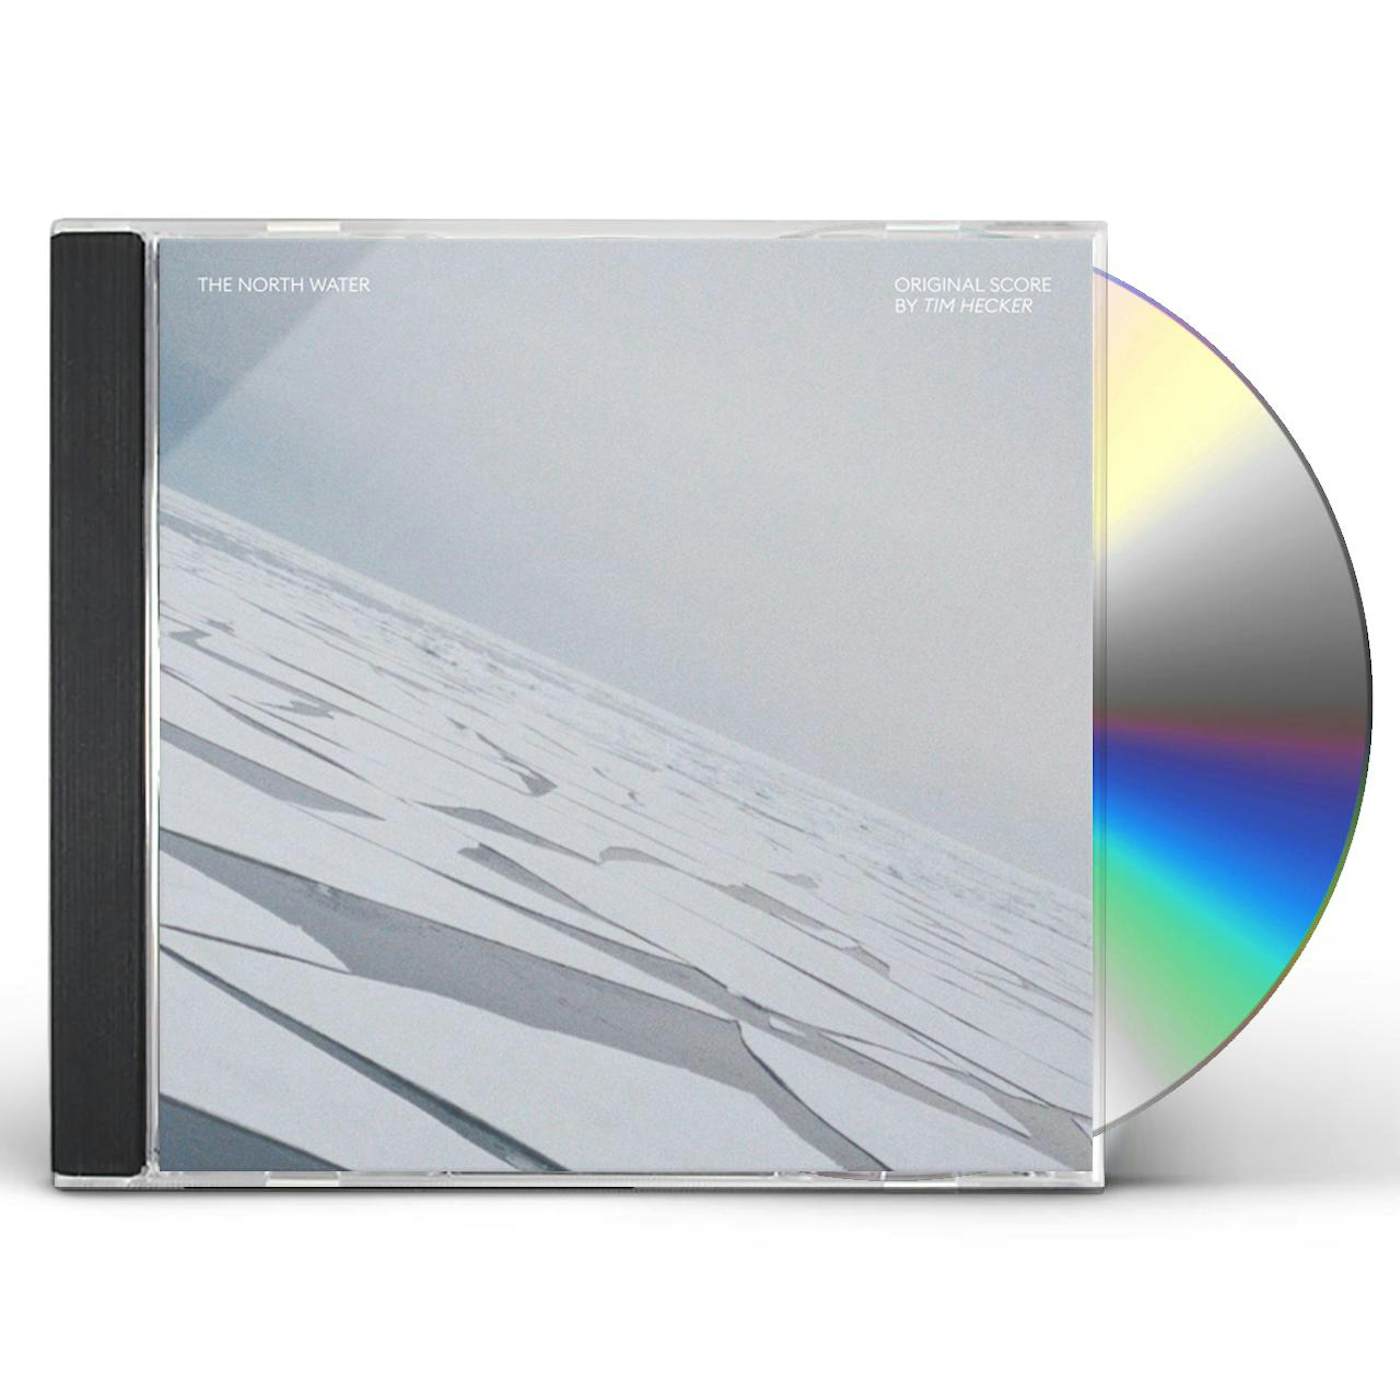 Tim Hecker NORTH WATER (ORIGINAL SCORE) CD